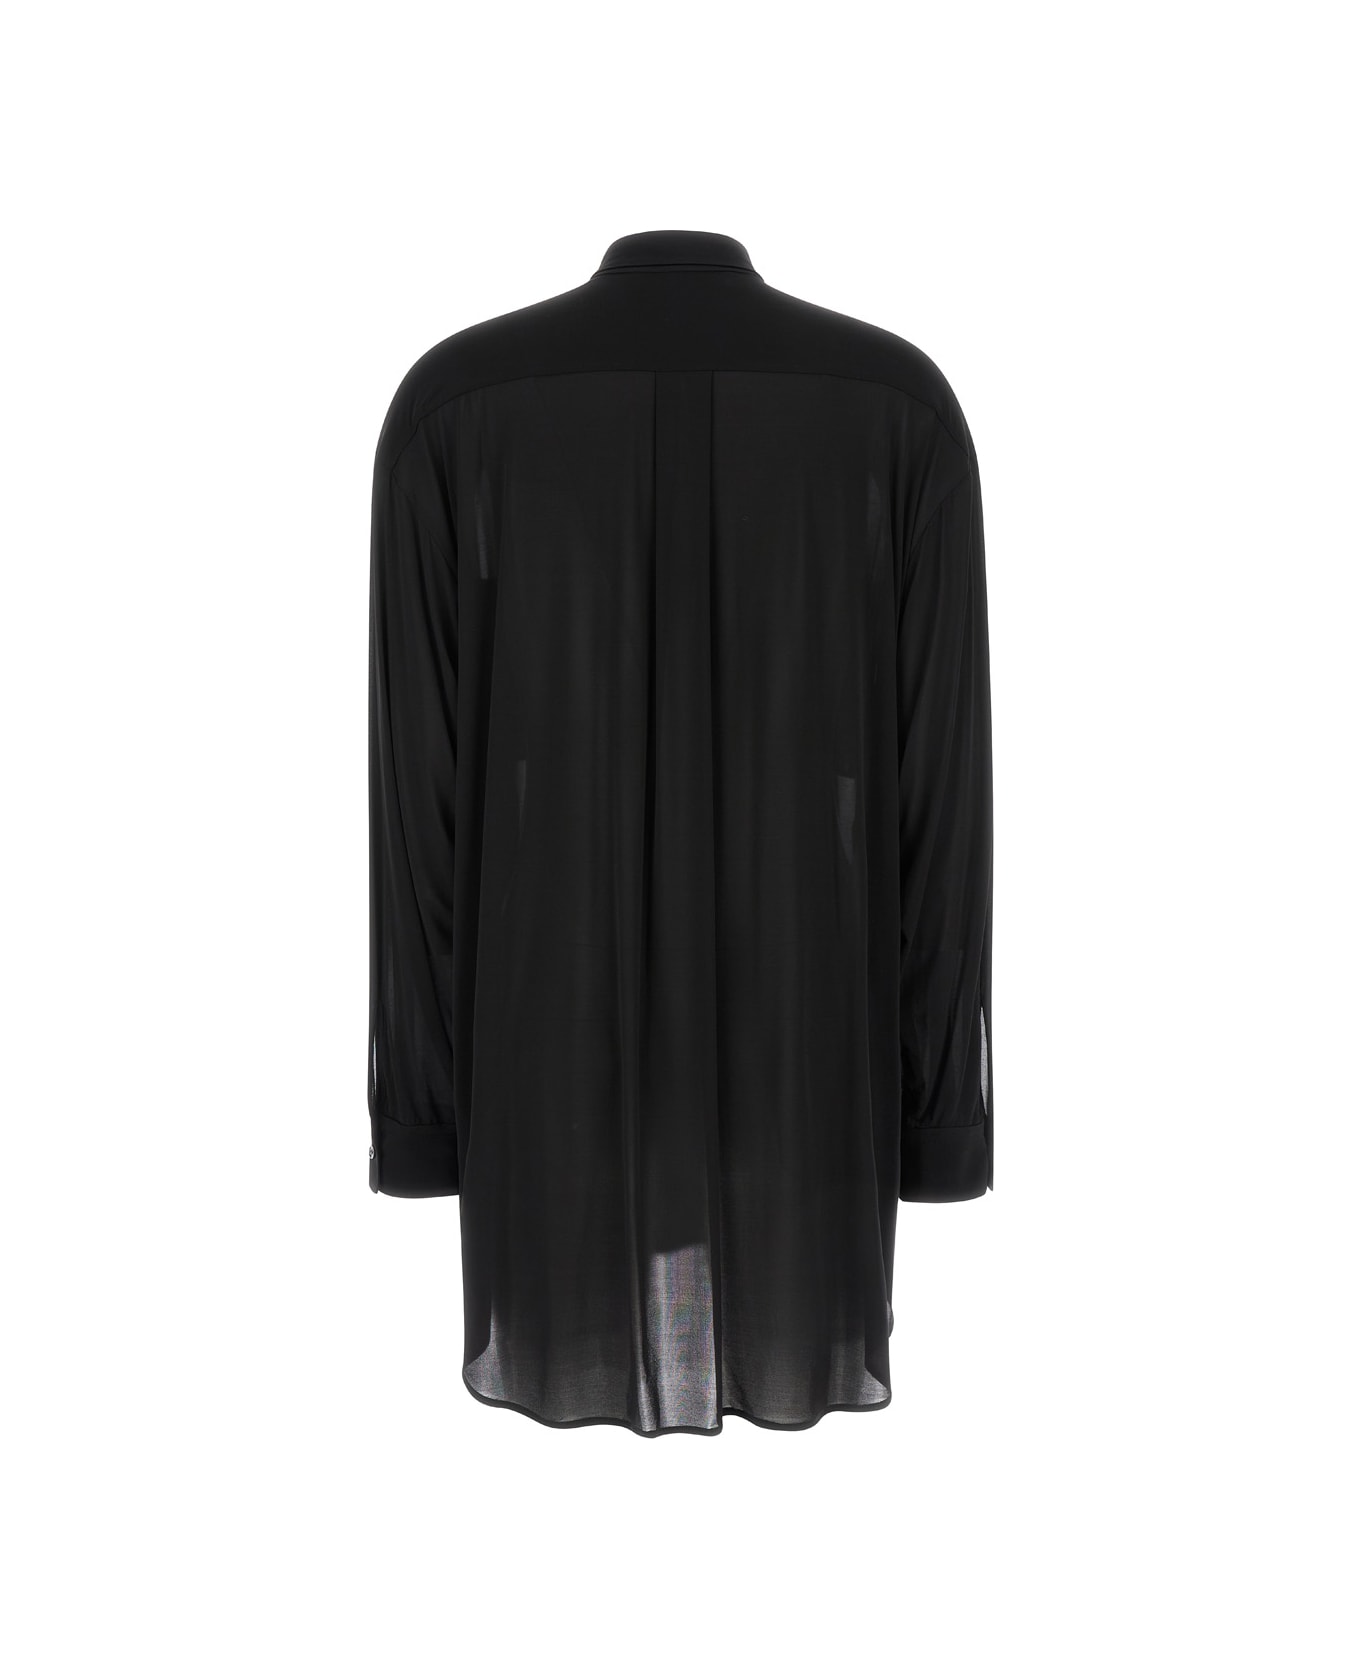 Philosophy di Lorenzo Serafini Oversized Black Shirt With Patch Pockets In Stretch Viscose Woman - Black